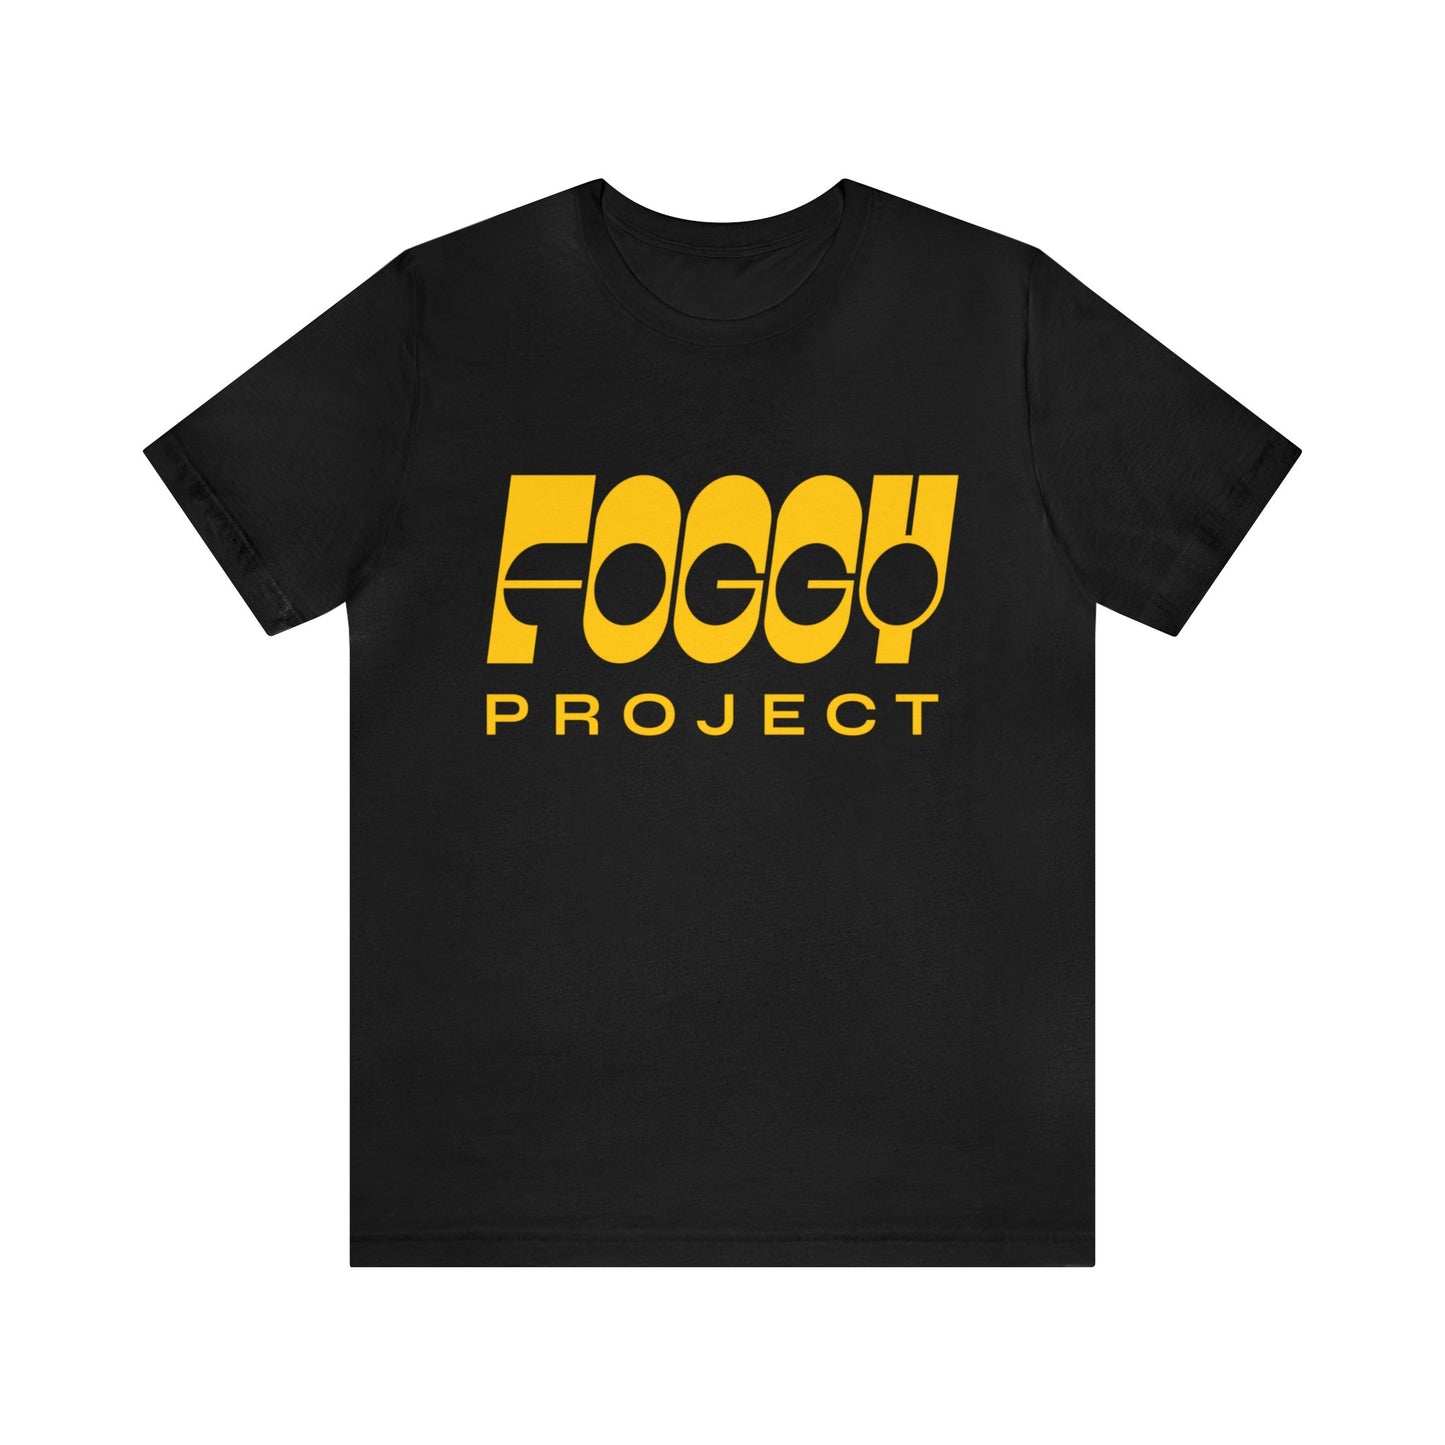 Foggy Project's Logo T-shirt Unisex Black